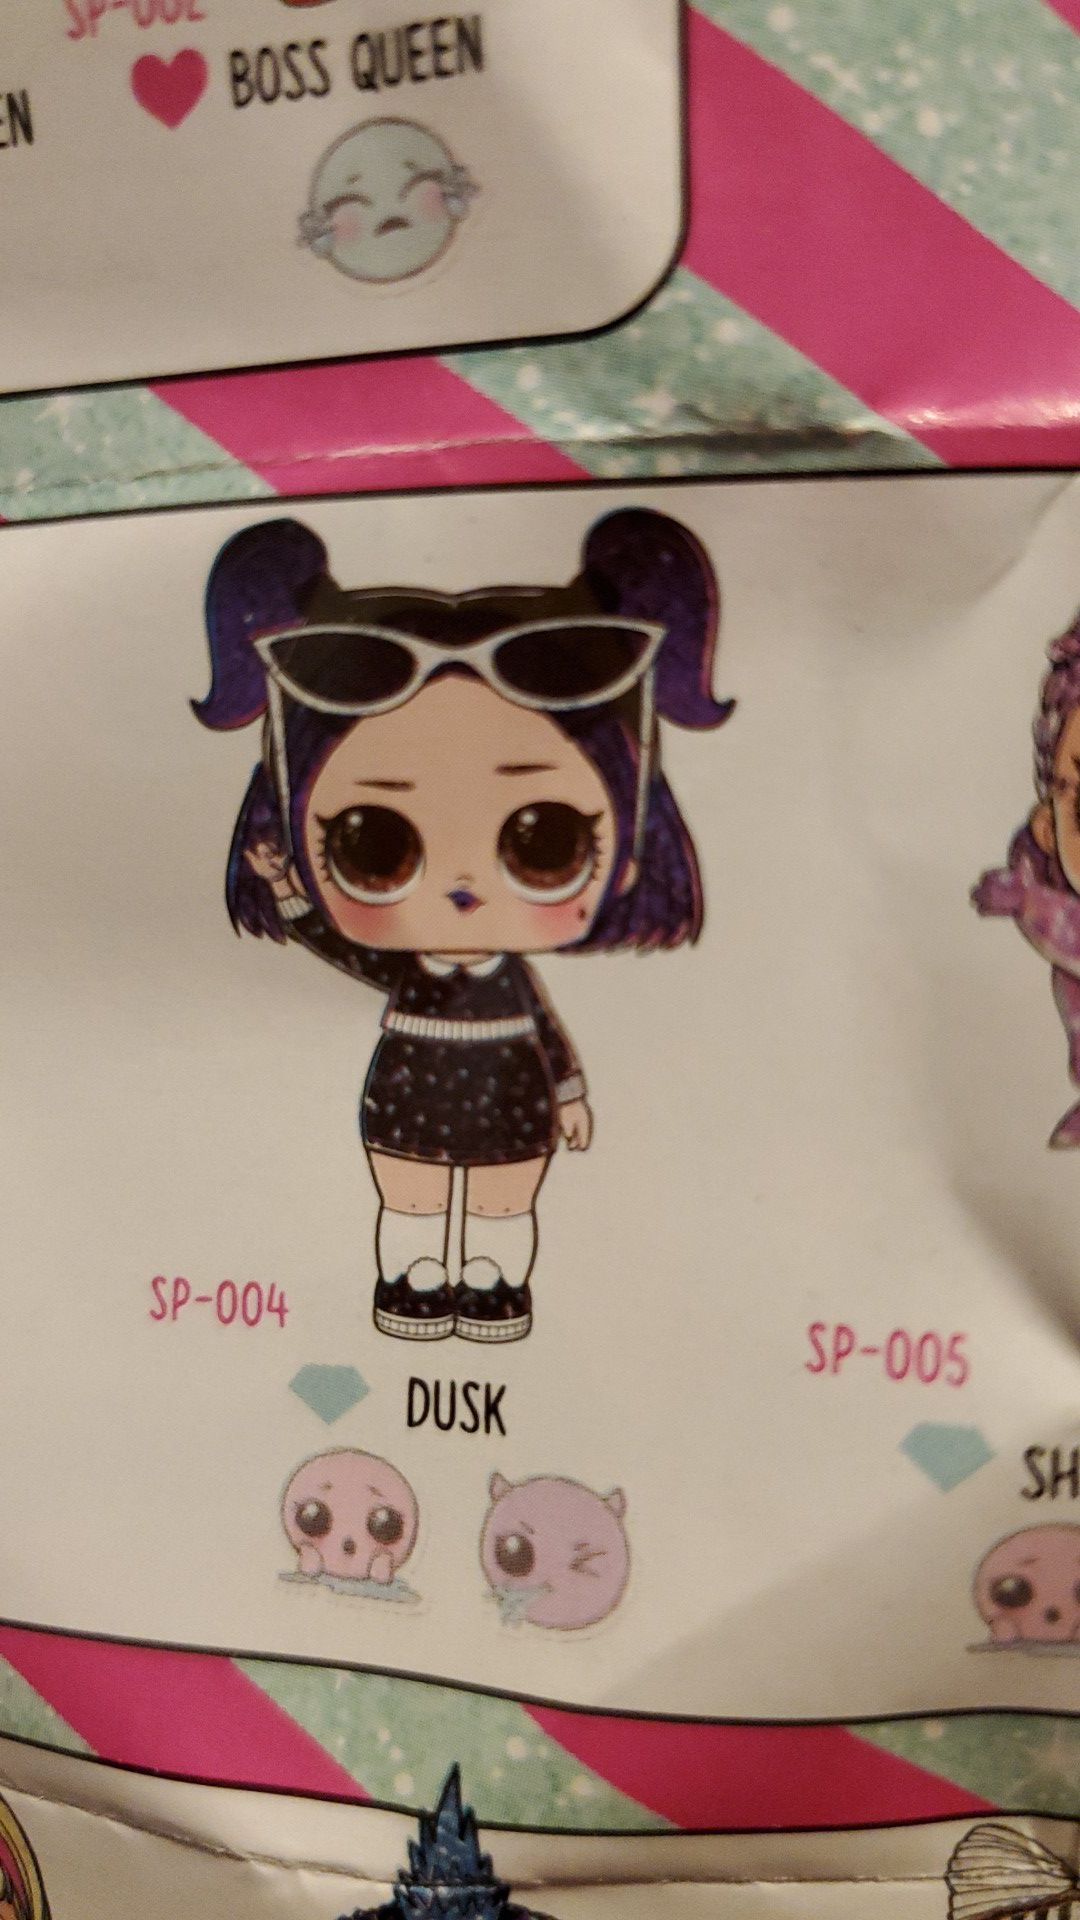 New Dusk lol doll